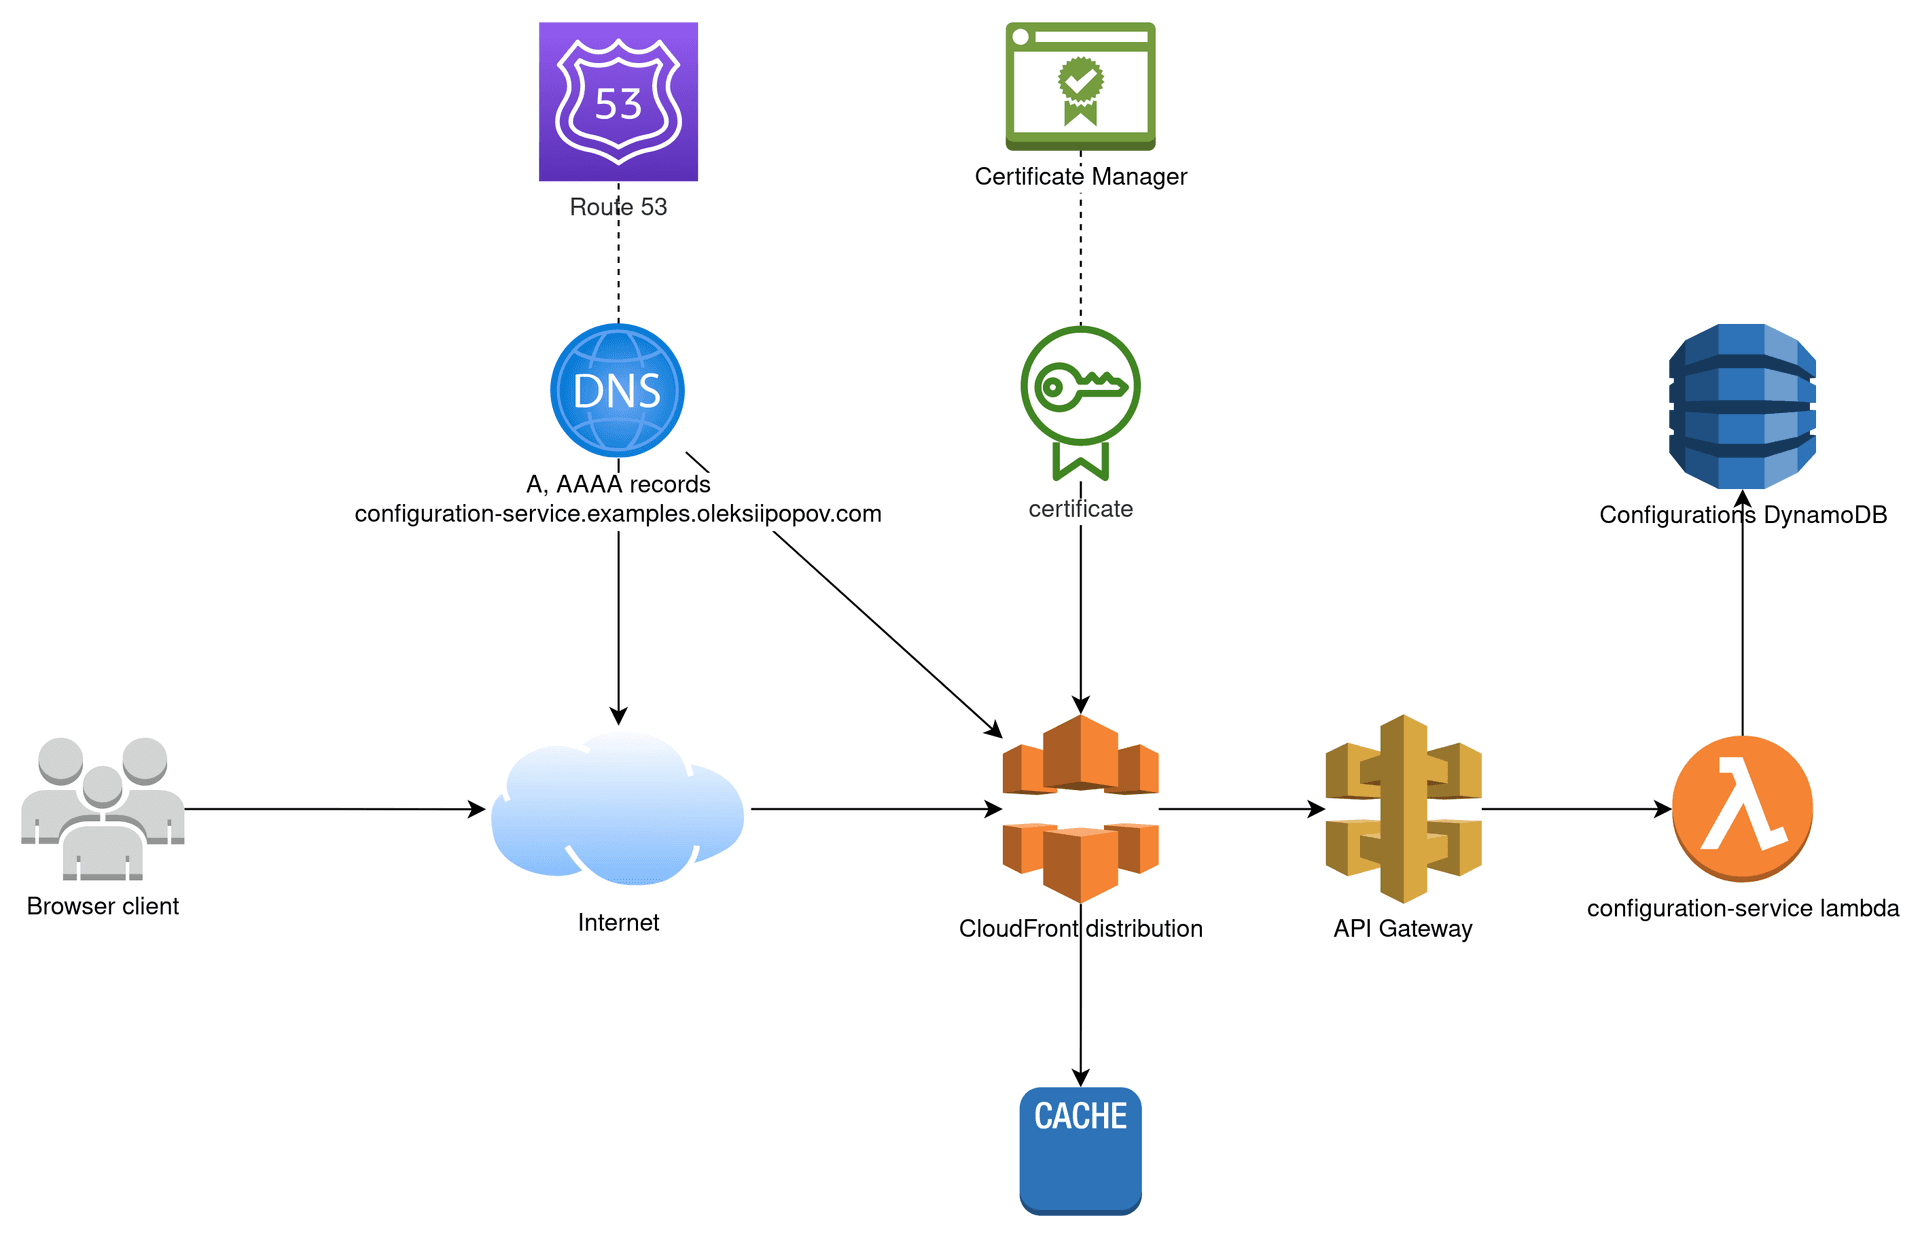 AWS design for the configuration service